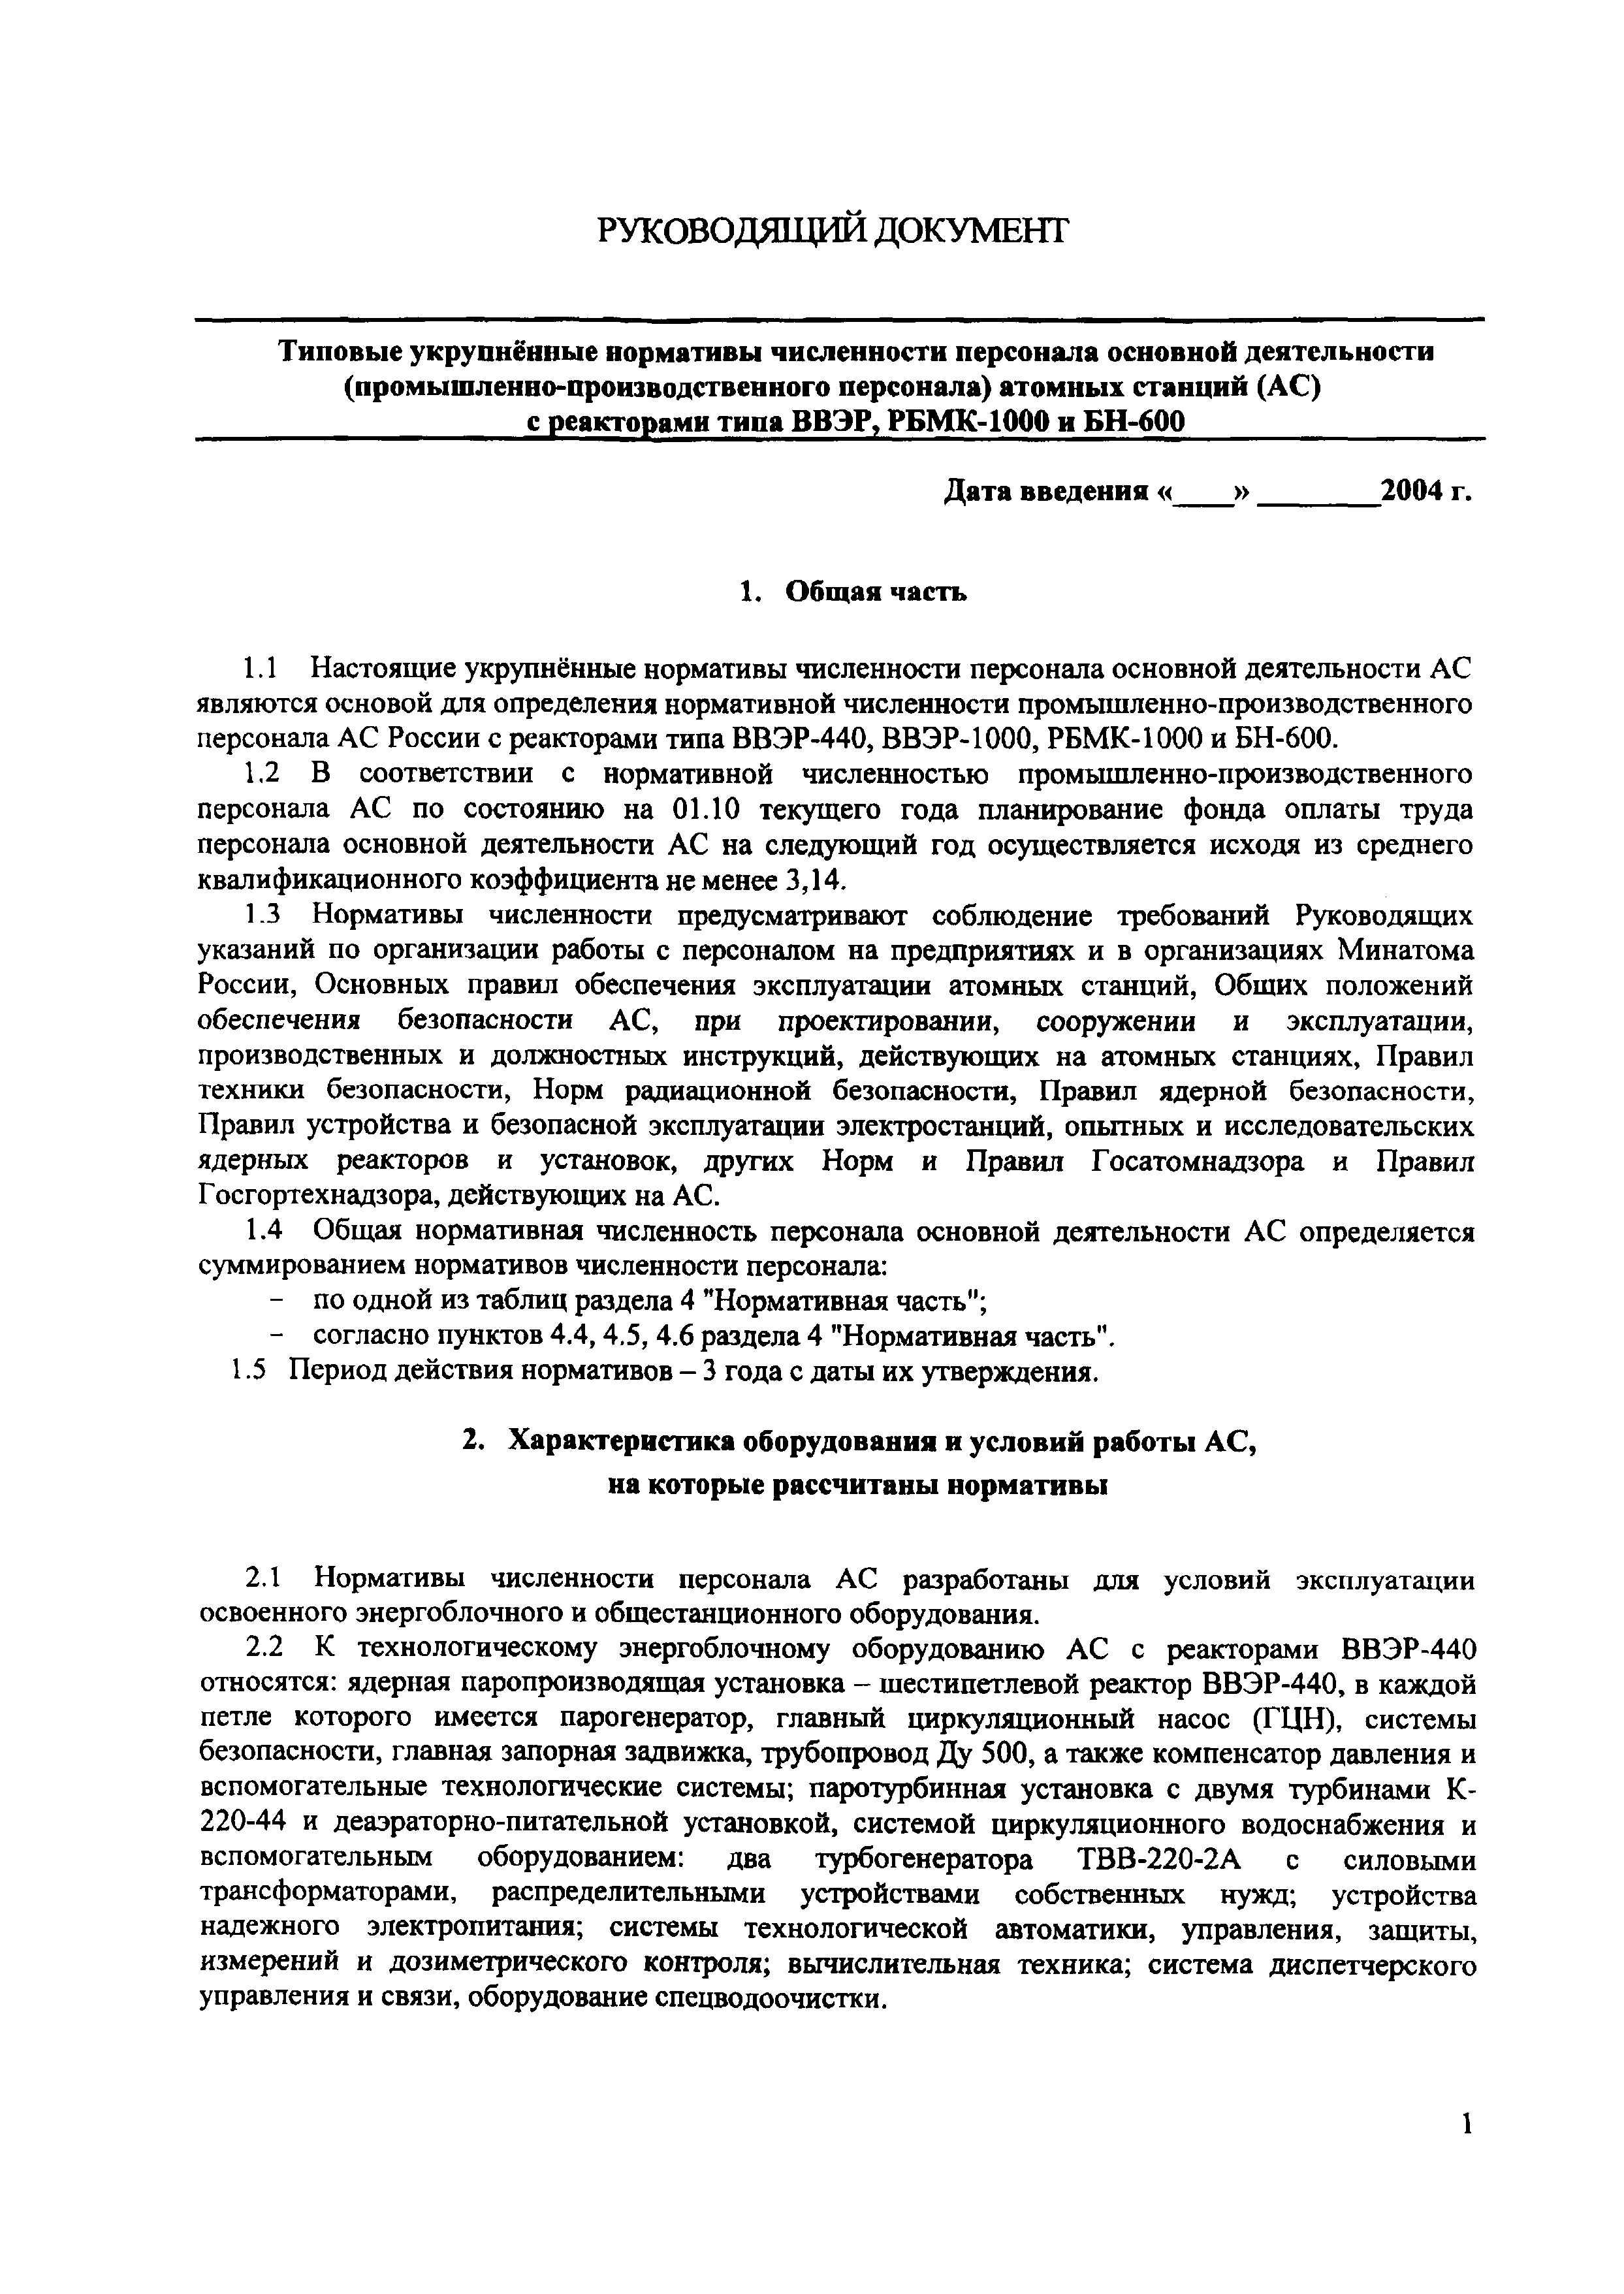 РД ЭО 0577-2004